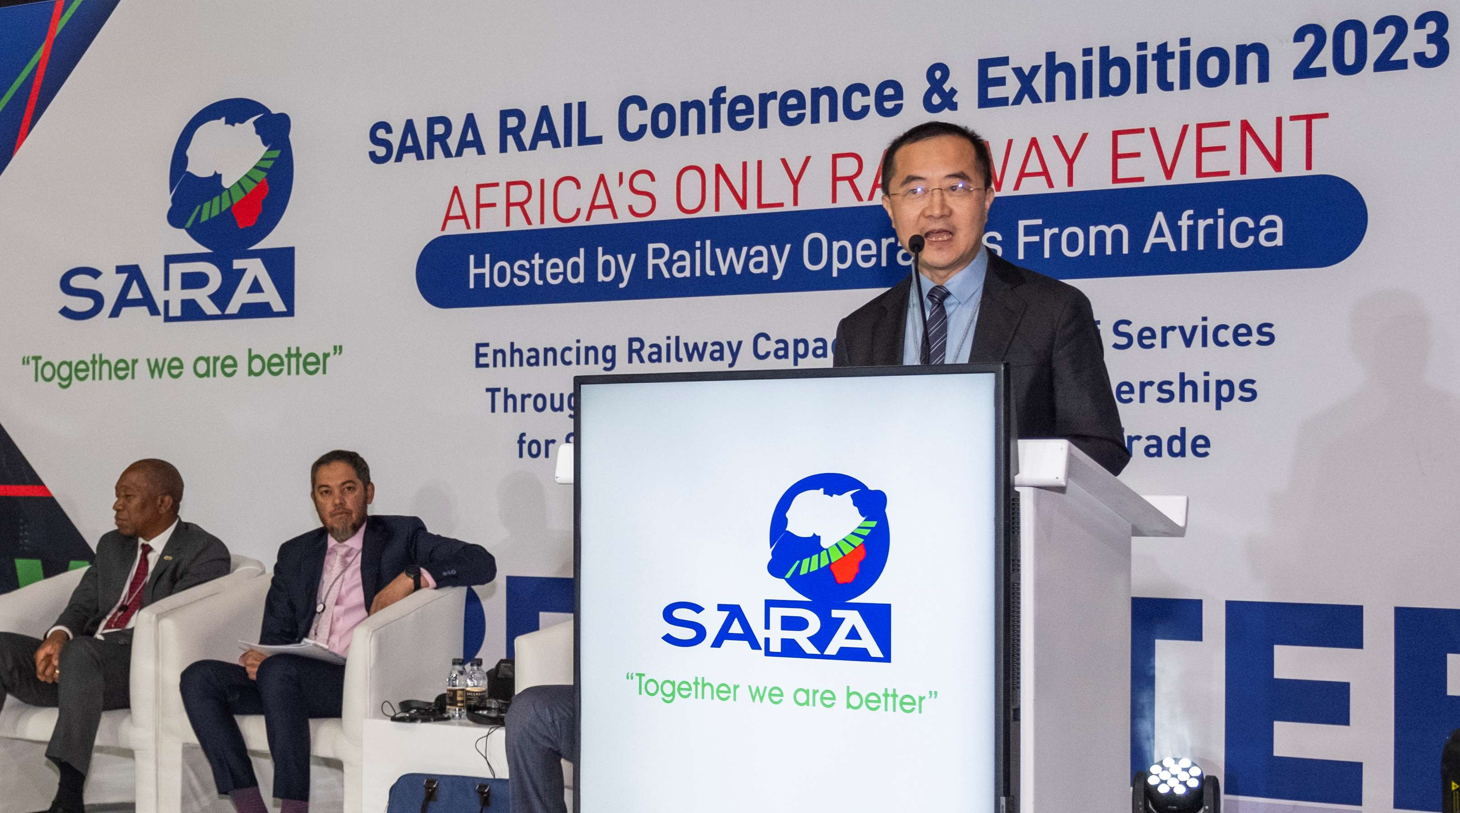 Driving digitalisation for future railway innovation